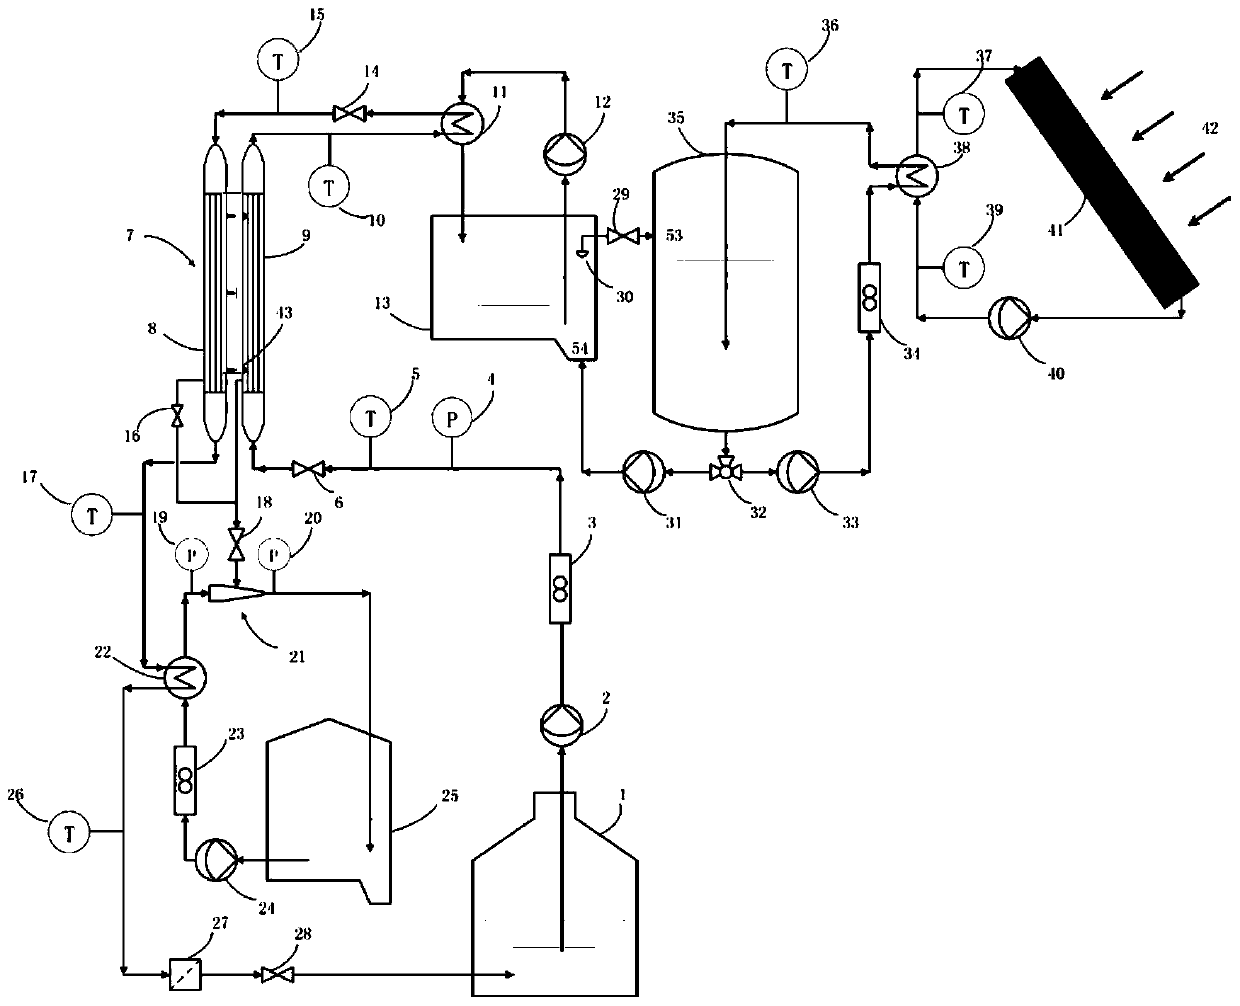 A new type of solar decompression multi-effect membrane distillation device